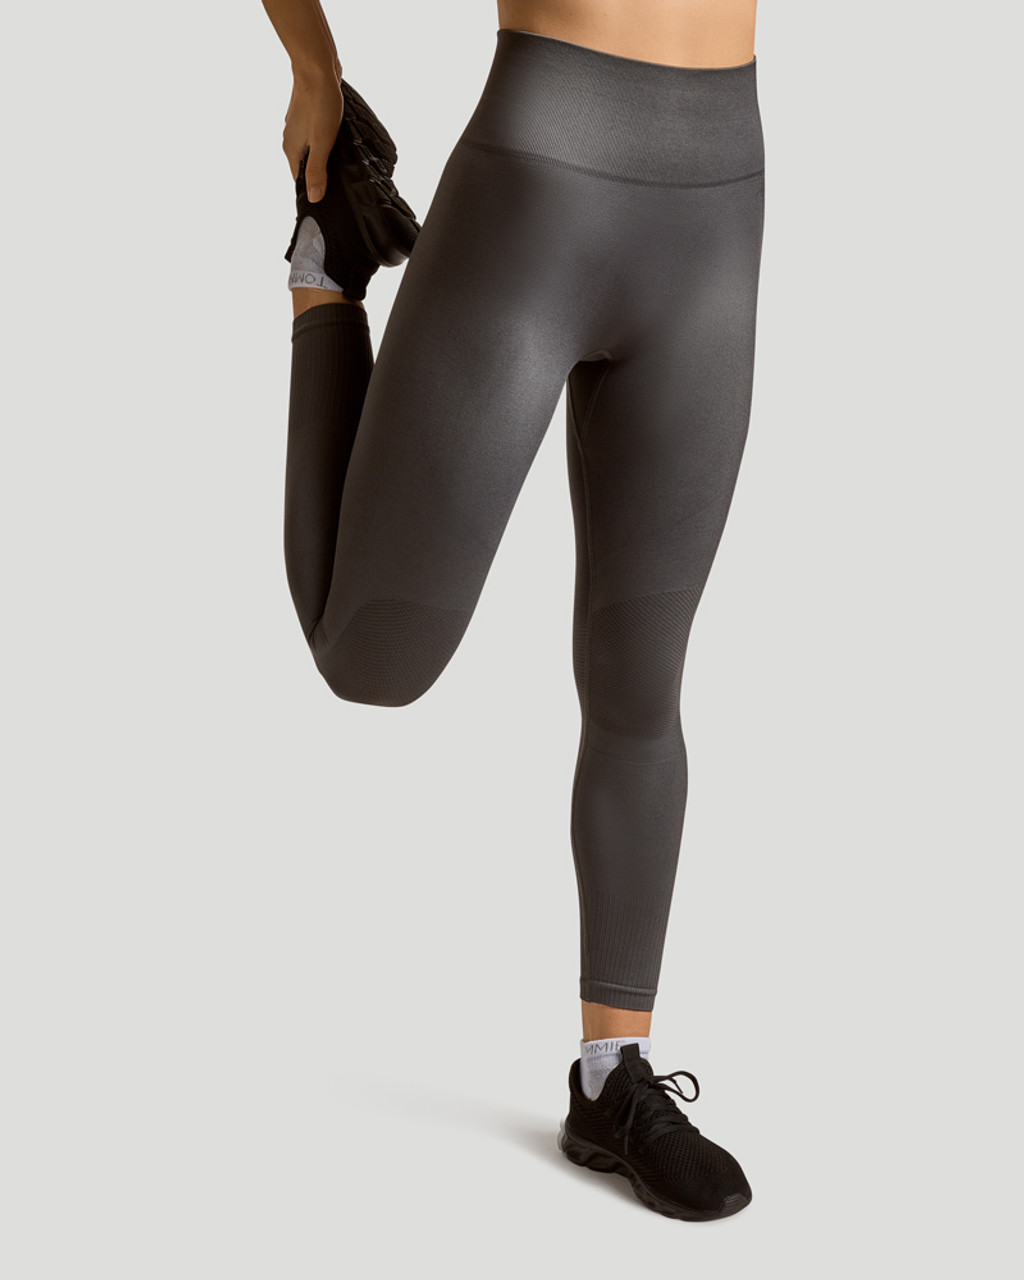 Buy Rbshop Football Leggings Yoga Women's Compression Tights